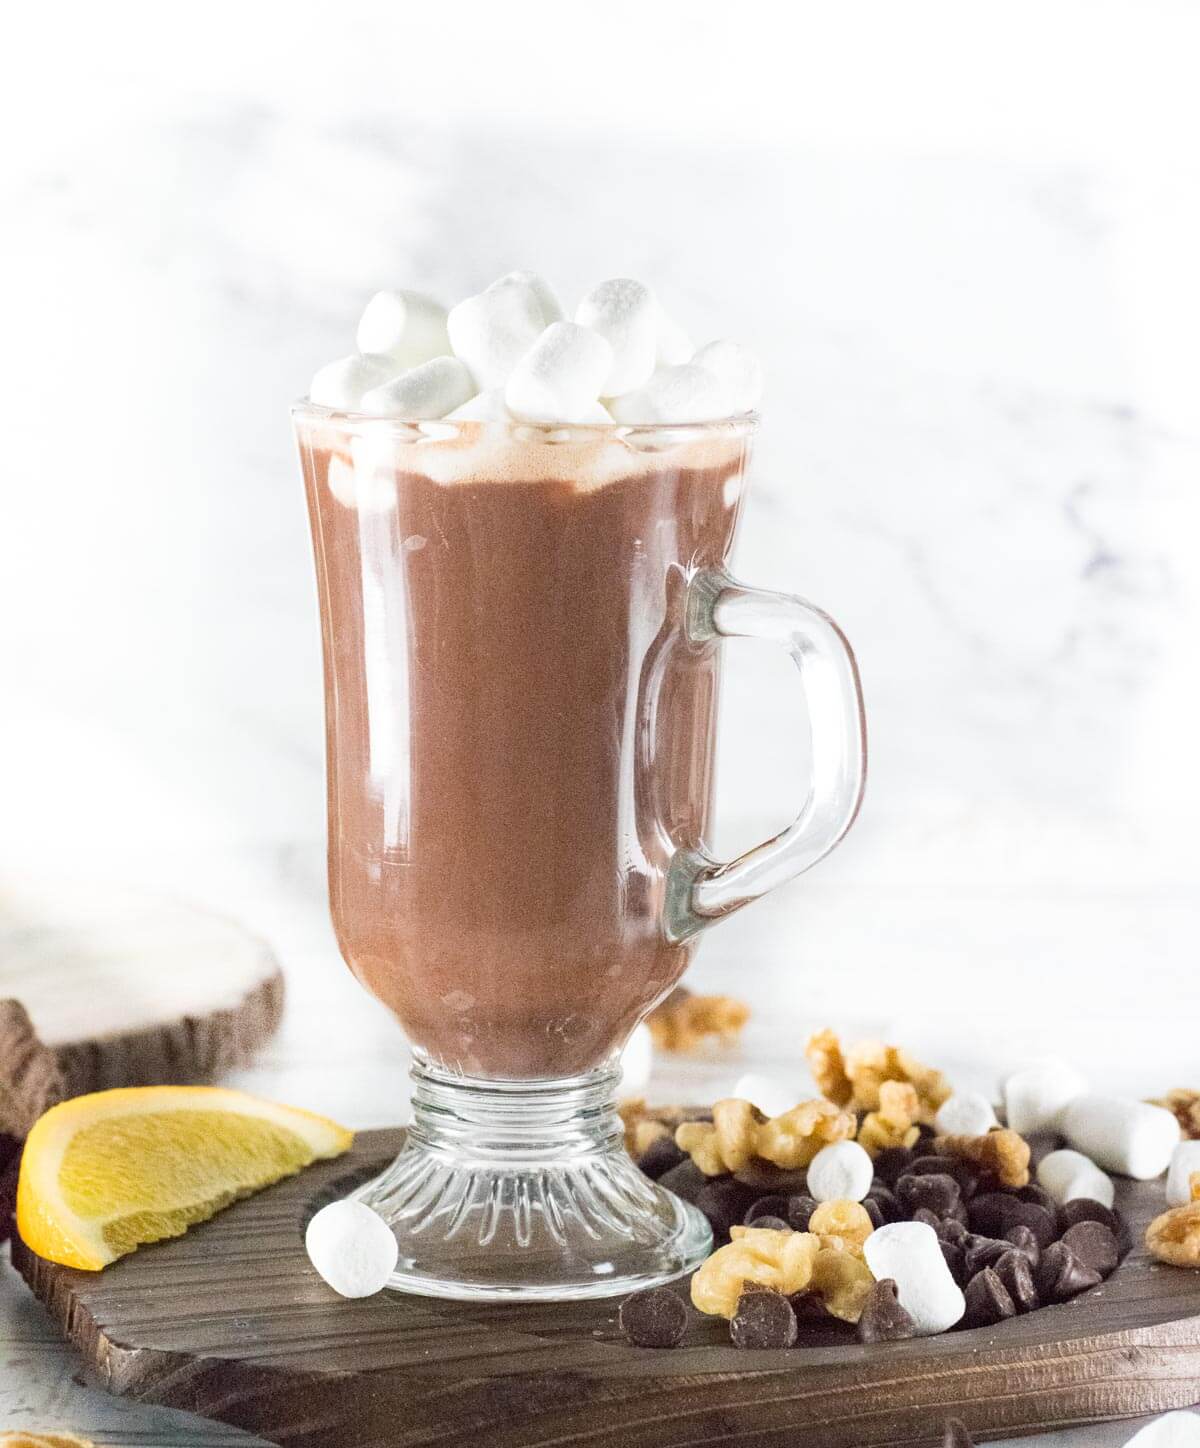 Creamy Hot Chocolate in mug with marshmallows.